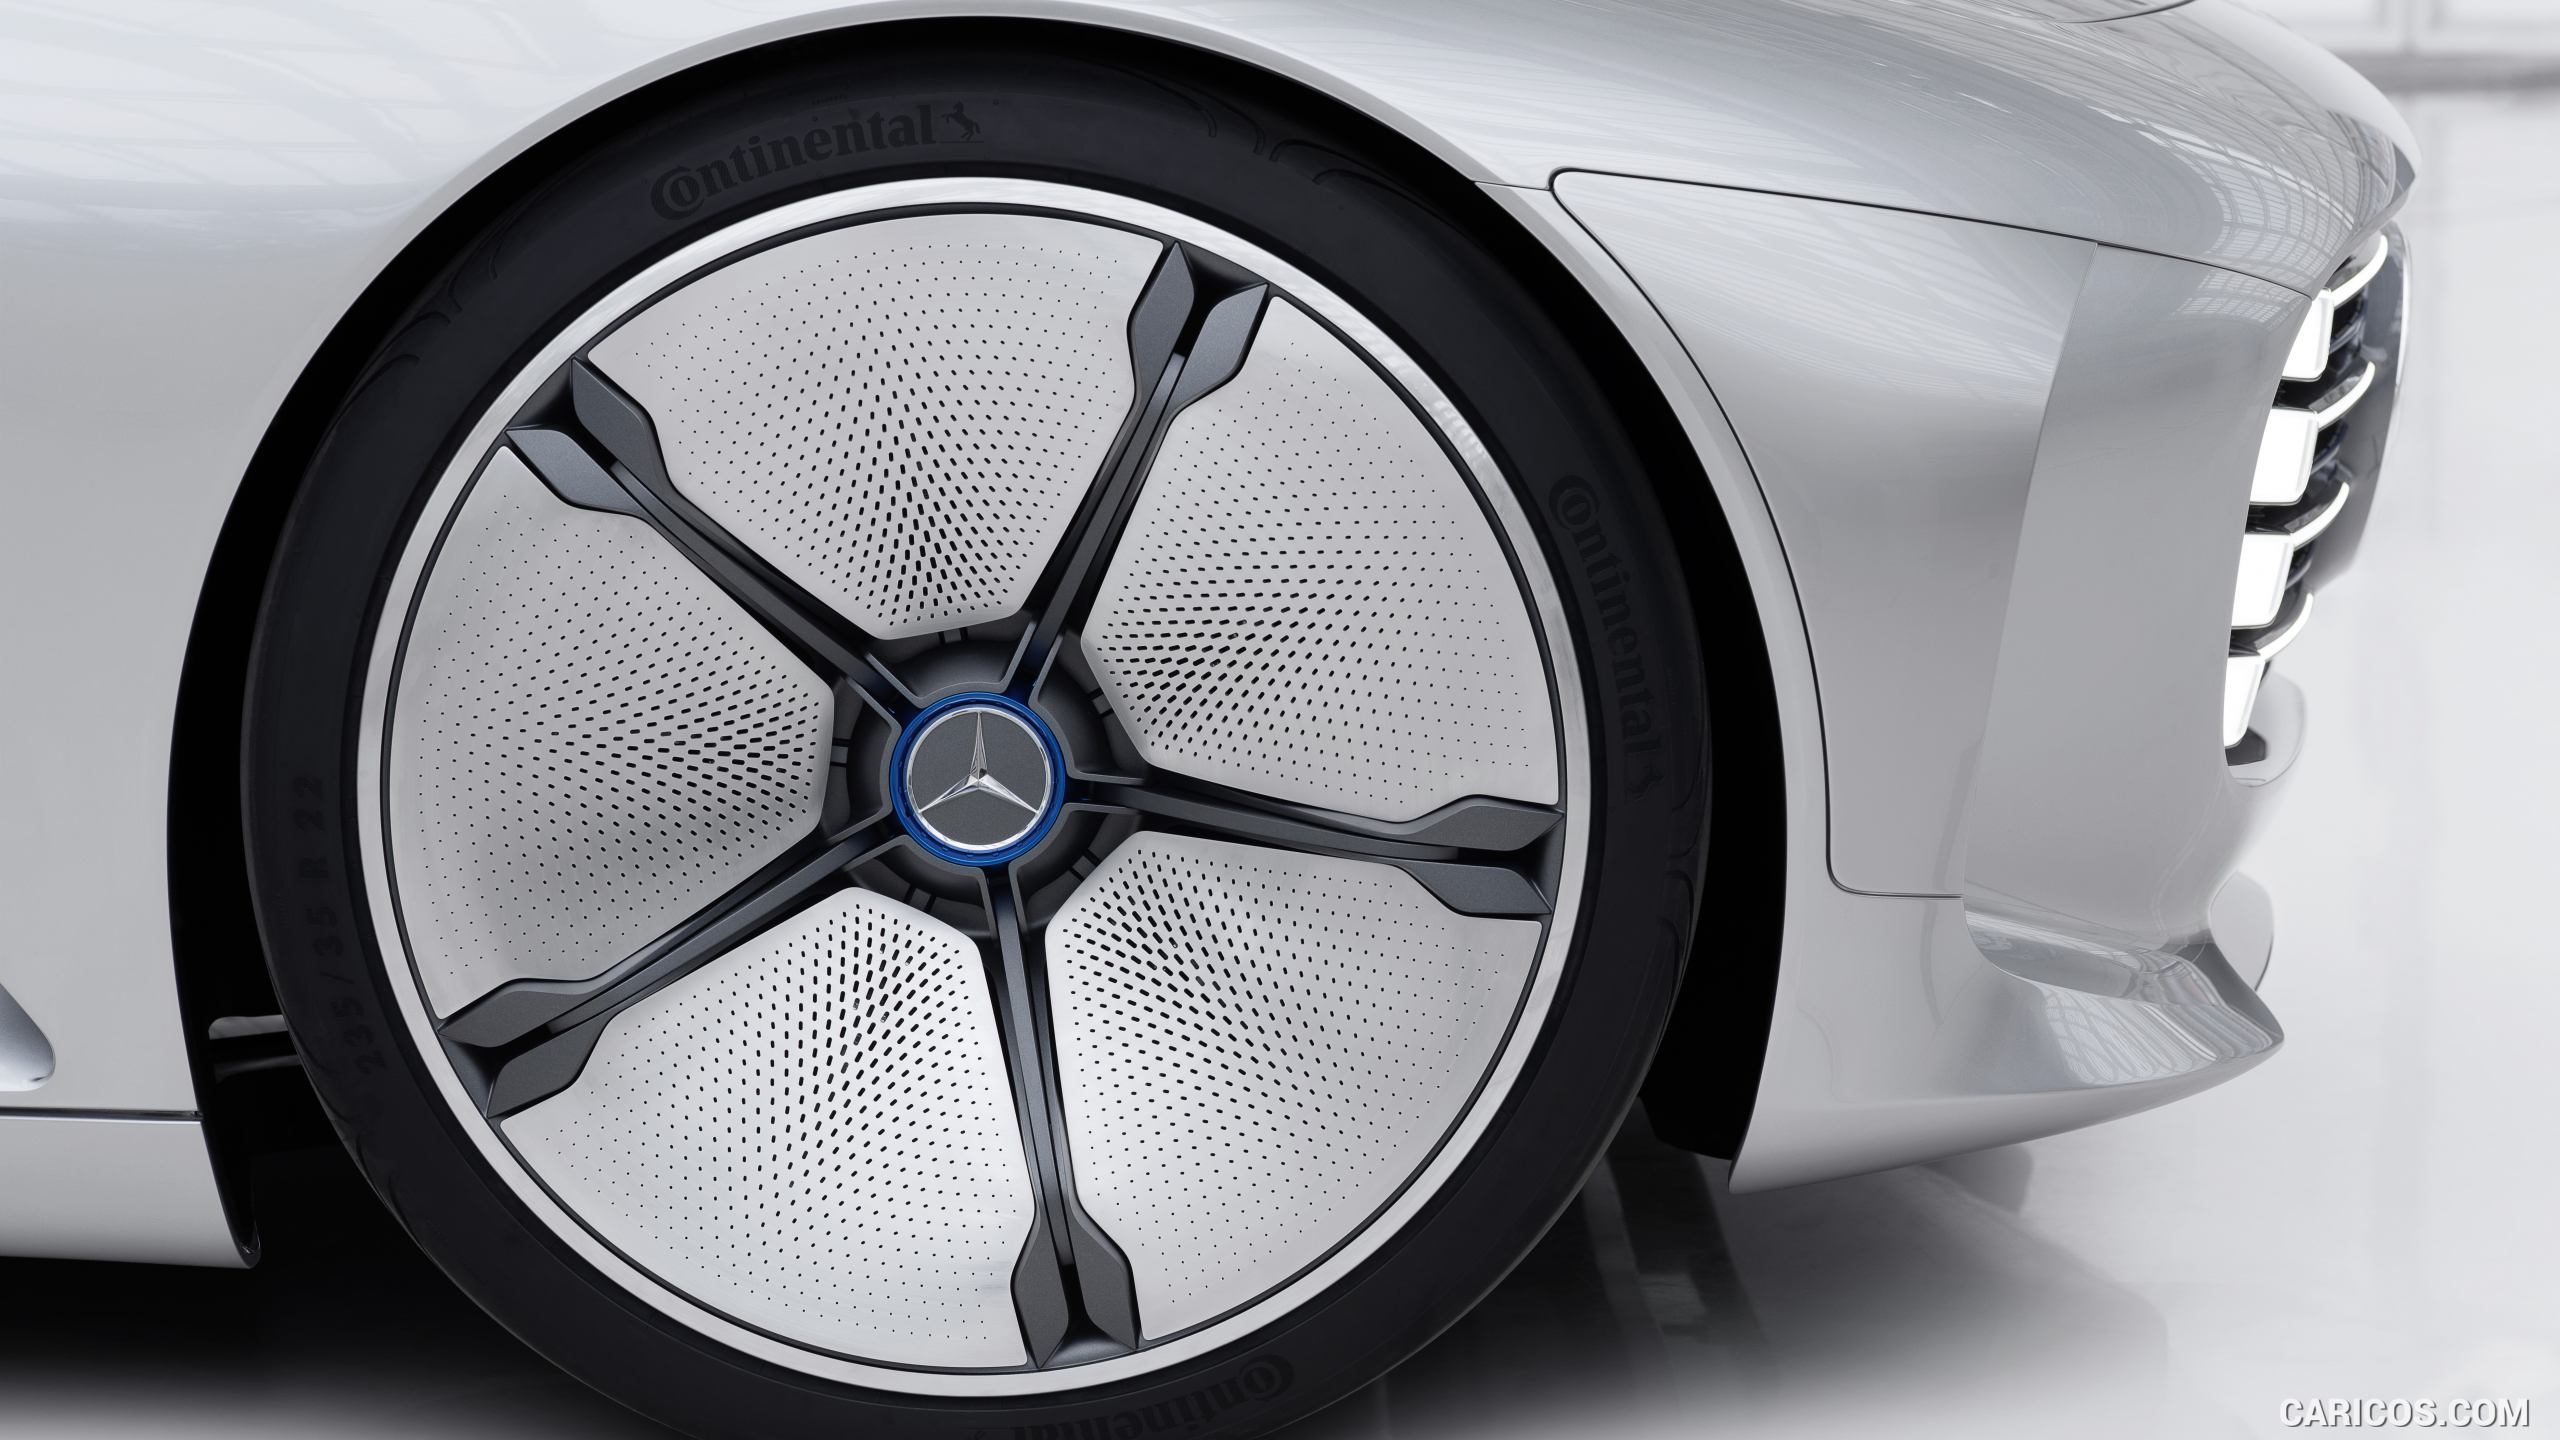 2015 Mercedes-Benz Concept IAA (Intelligent Aerodynamic Automobile) - Wheel, #38 of 49